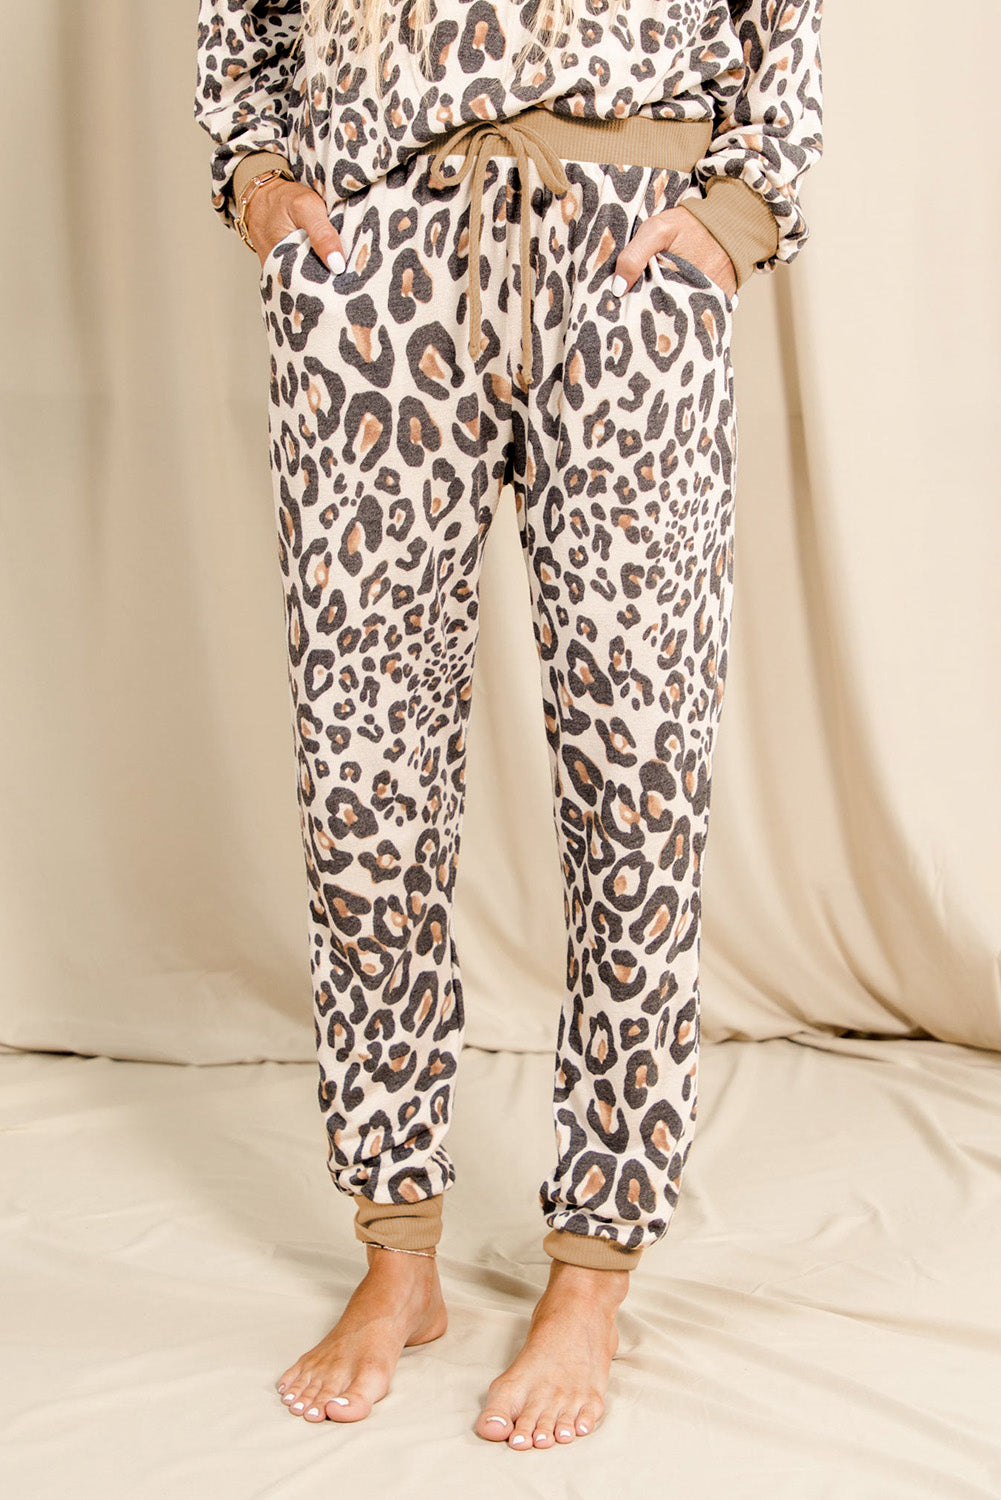 Leopard Print Long Sleeve Top and Drawstring Pants Loungewear Item NO.: 5287